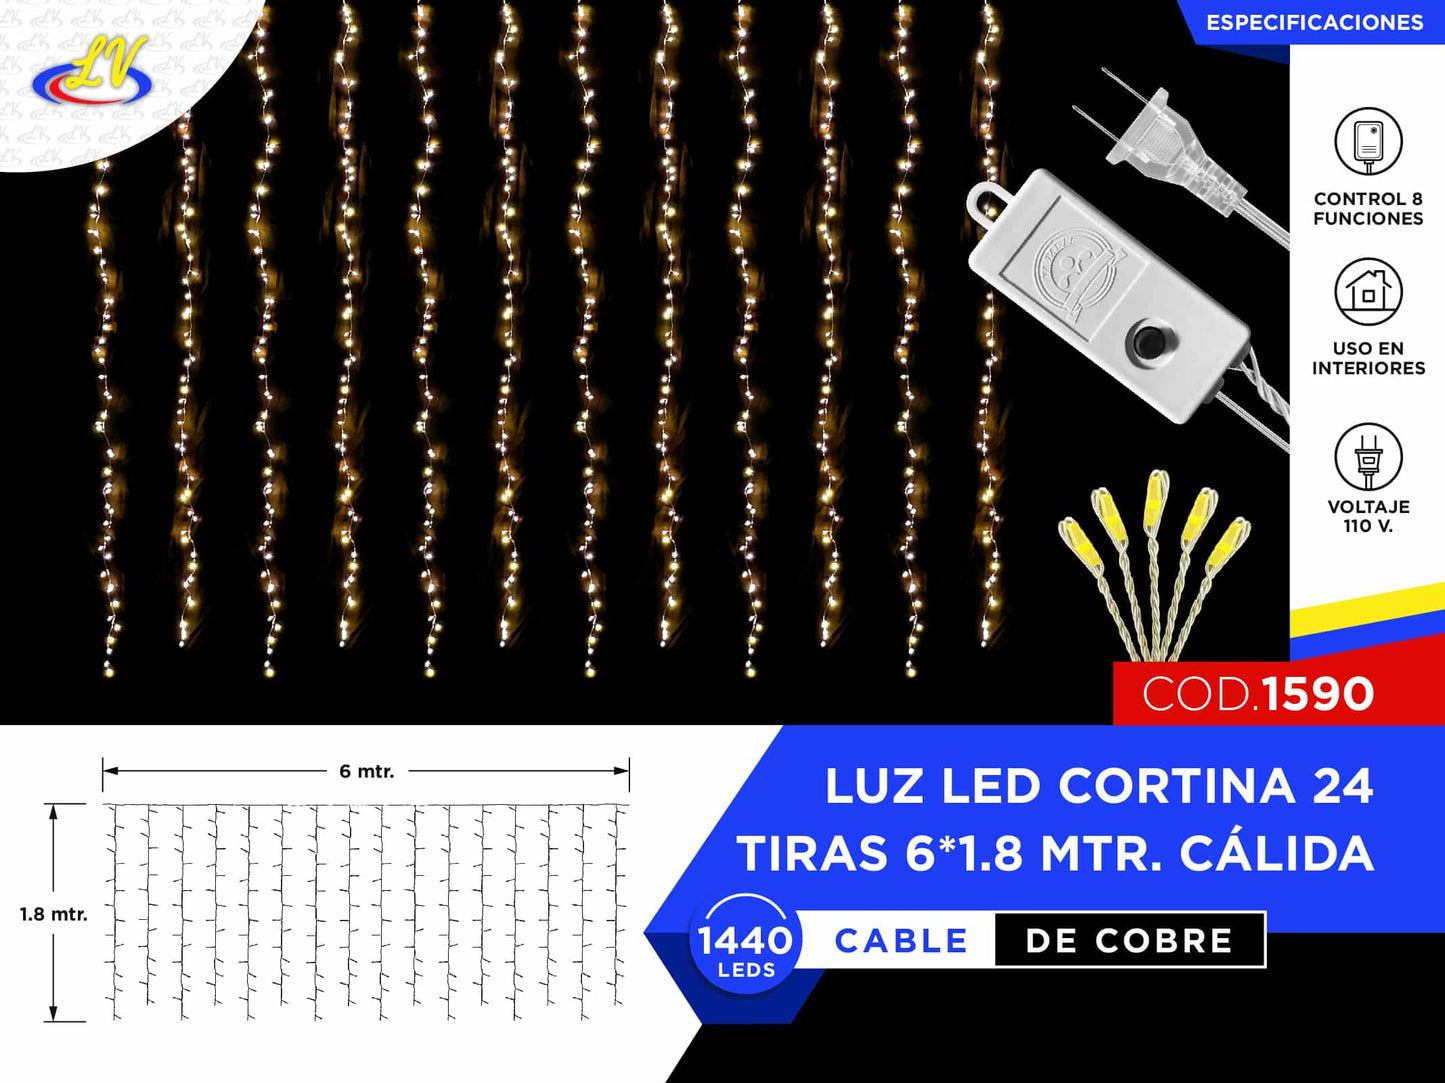 CORTINA 24 TIRAS – CALIDA - 6 X 1.8 MTR